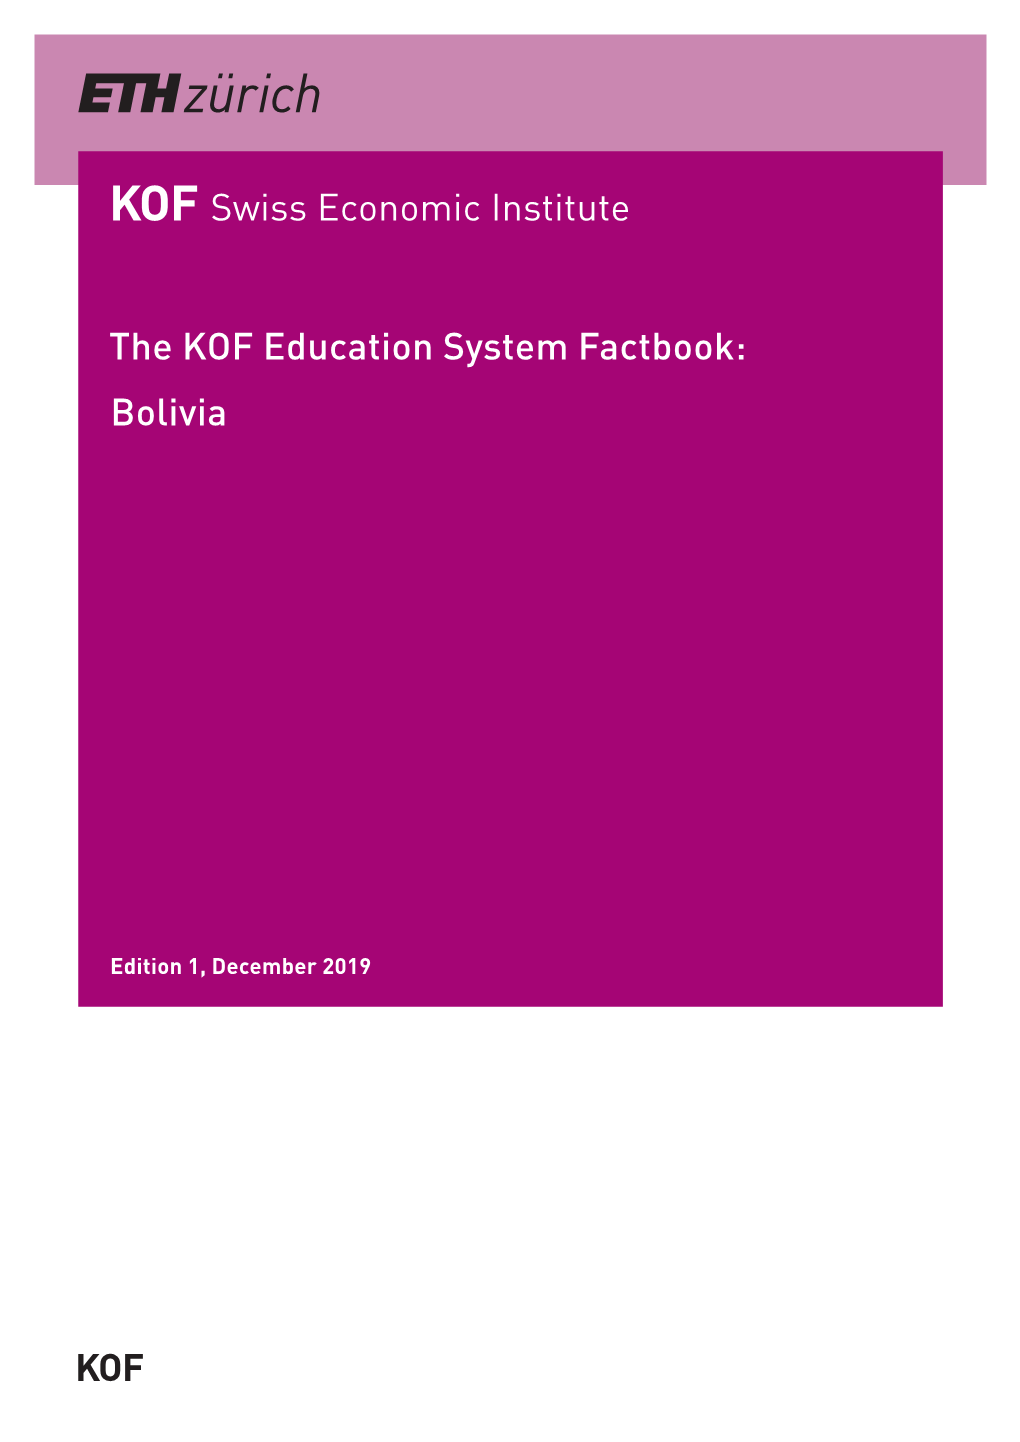 The KOF Education System Factbook: Bolivia